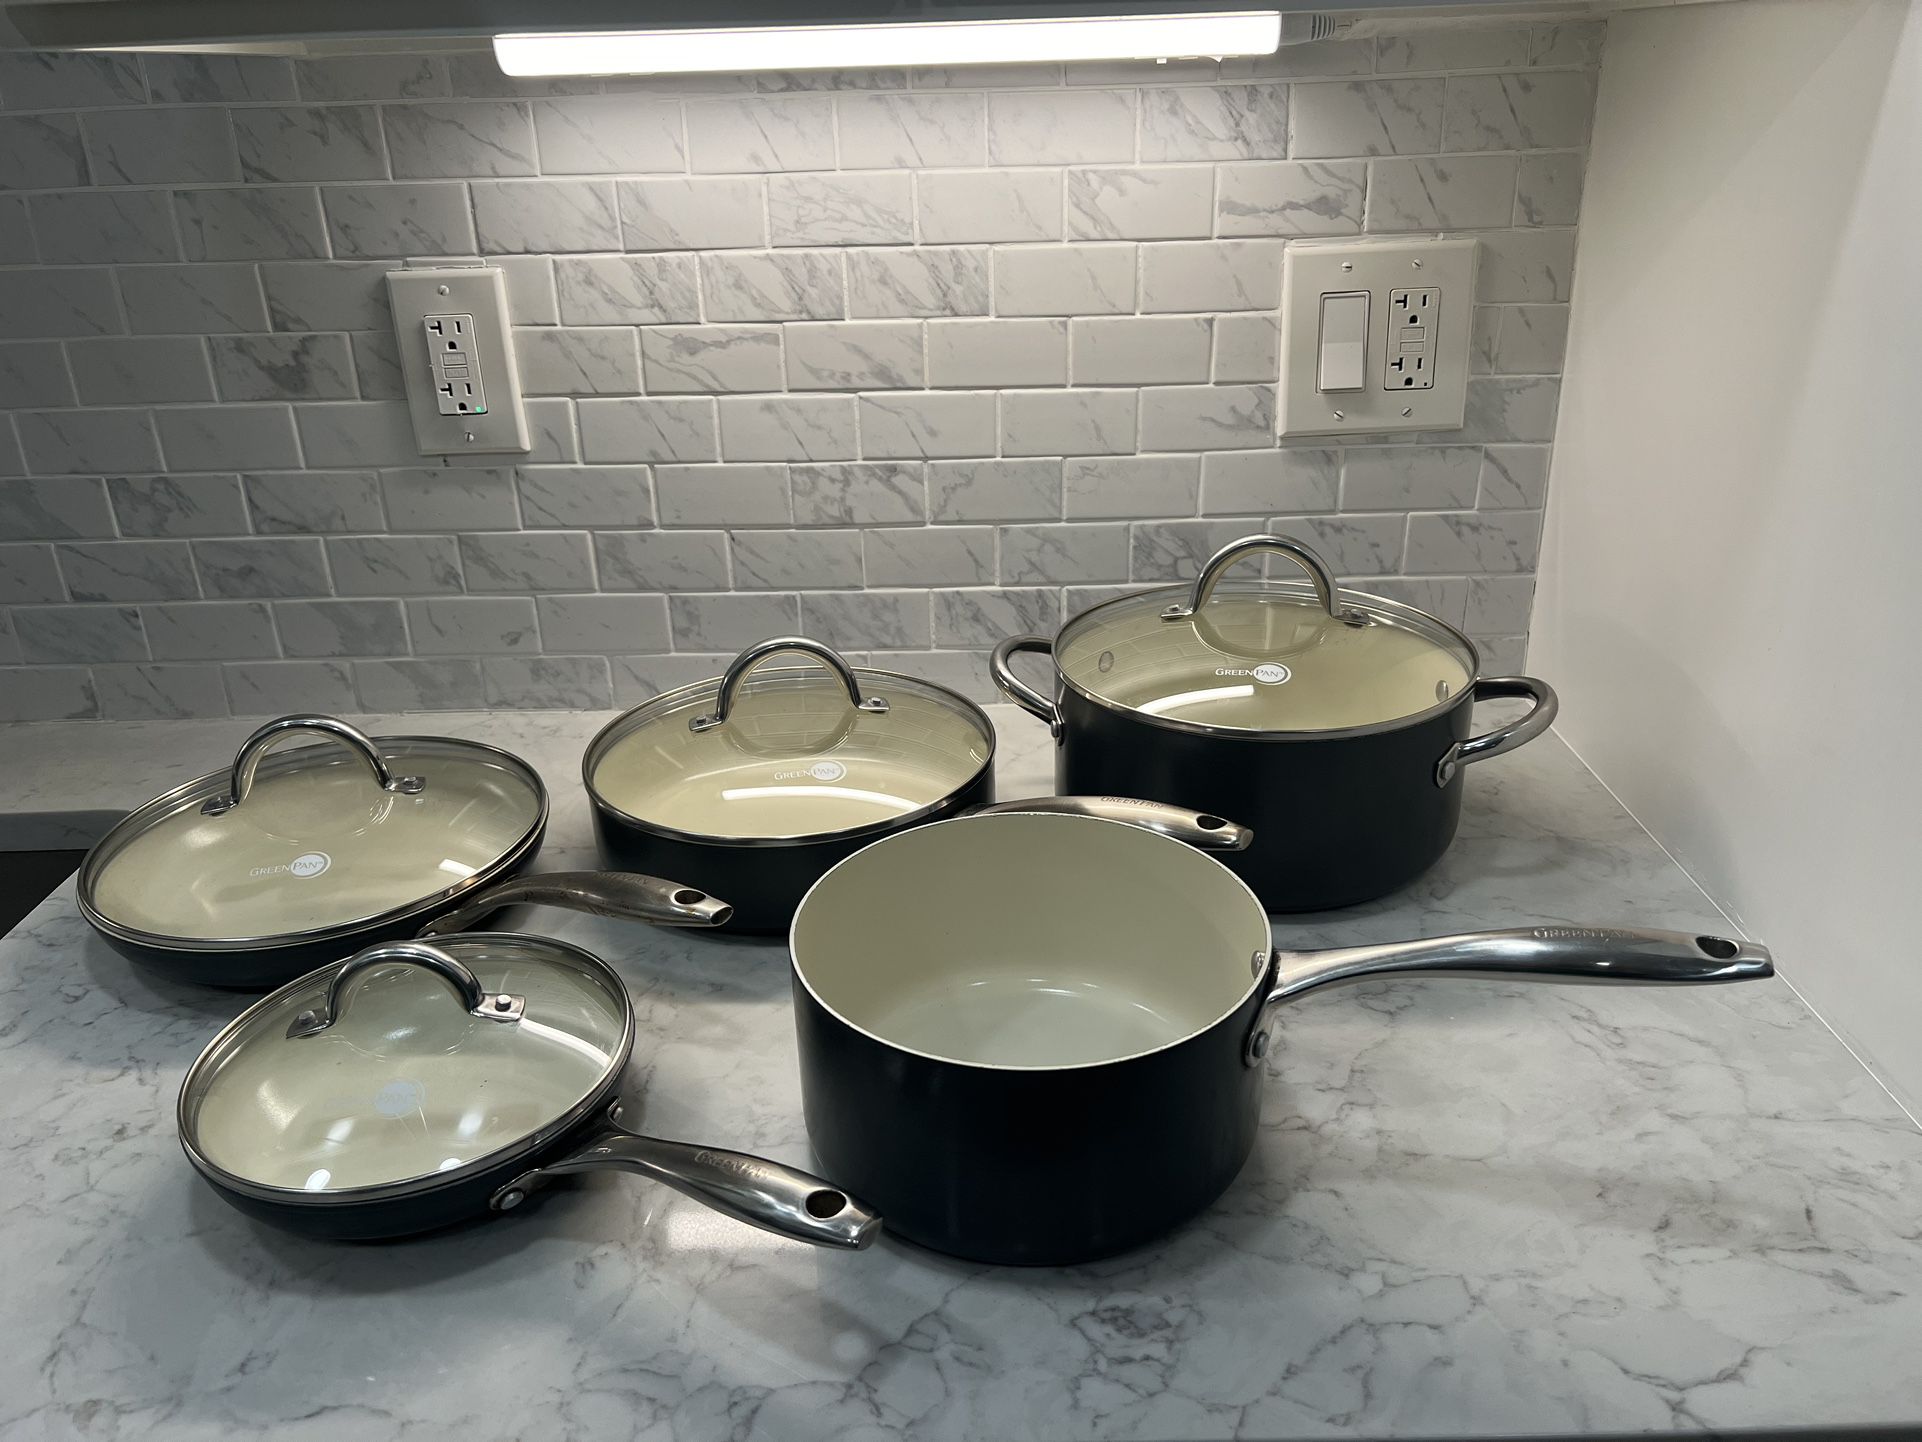 GreenPan Ceramic Nonstick Cookware Set